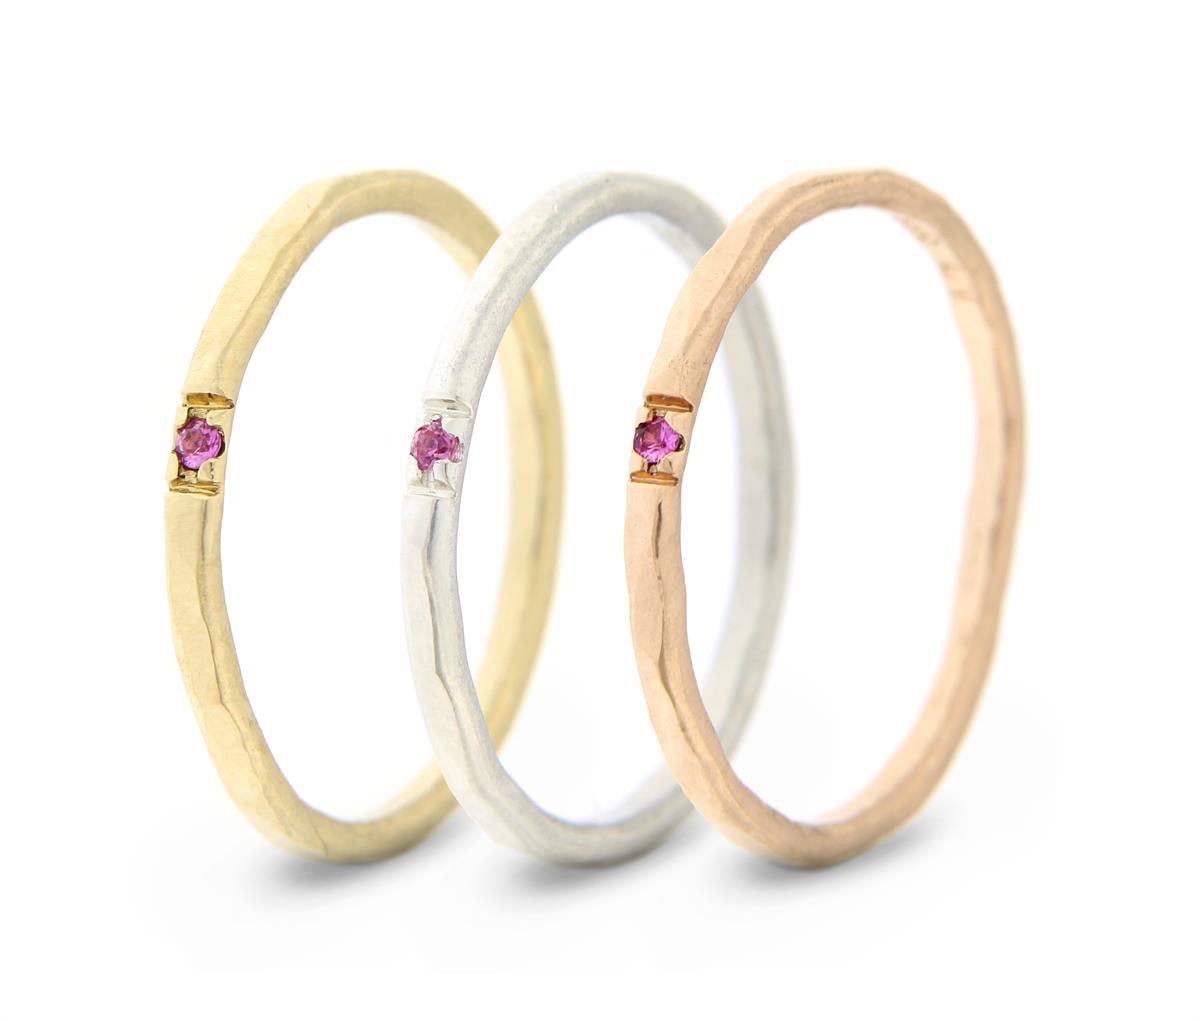 Katie g. Jewellery_Hammered Rings 1,5-2,5mm - in 14kt. Roségold - rosa Saphir